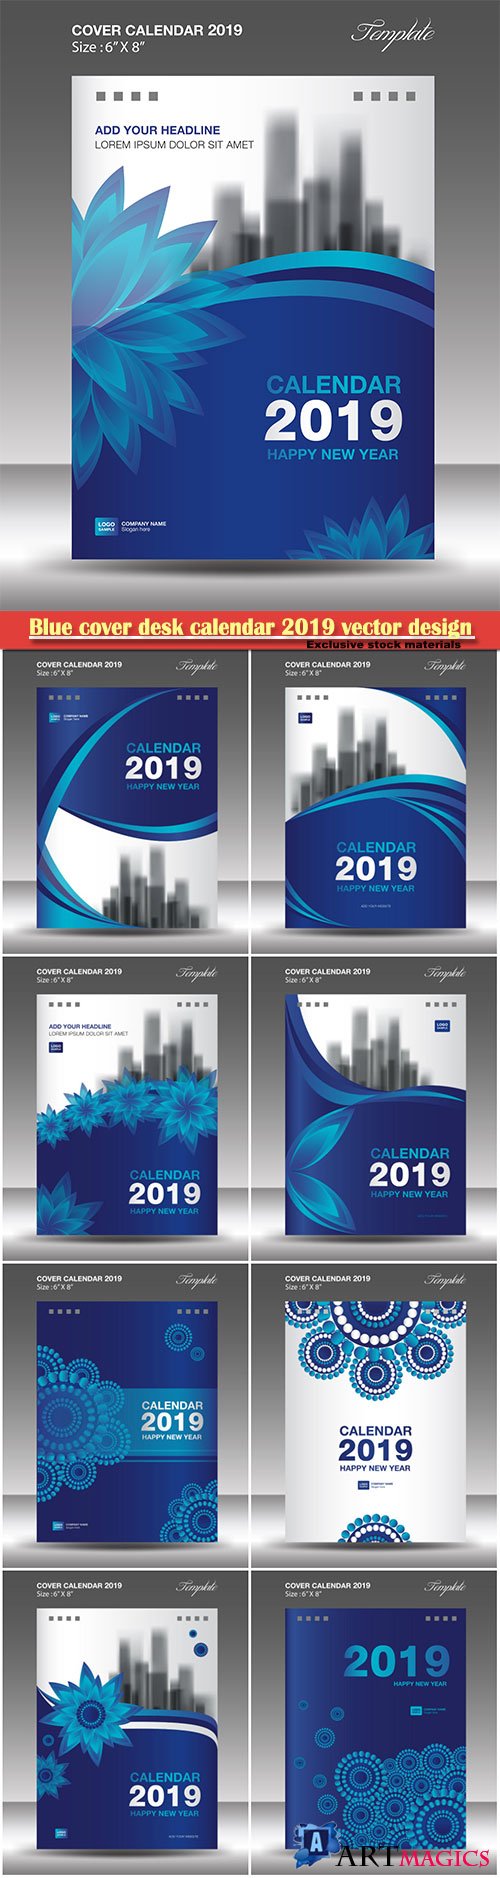 Blue cover desk calendar 2019 vector design template